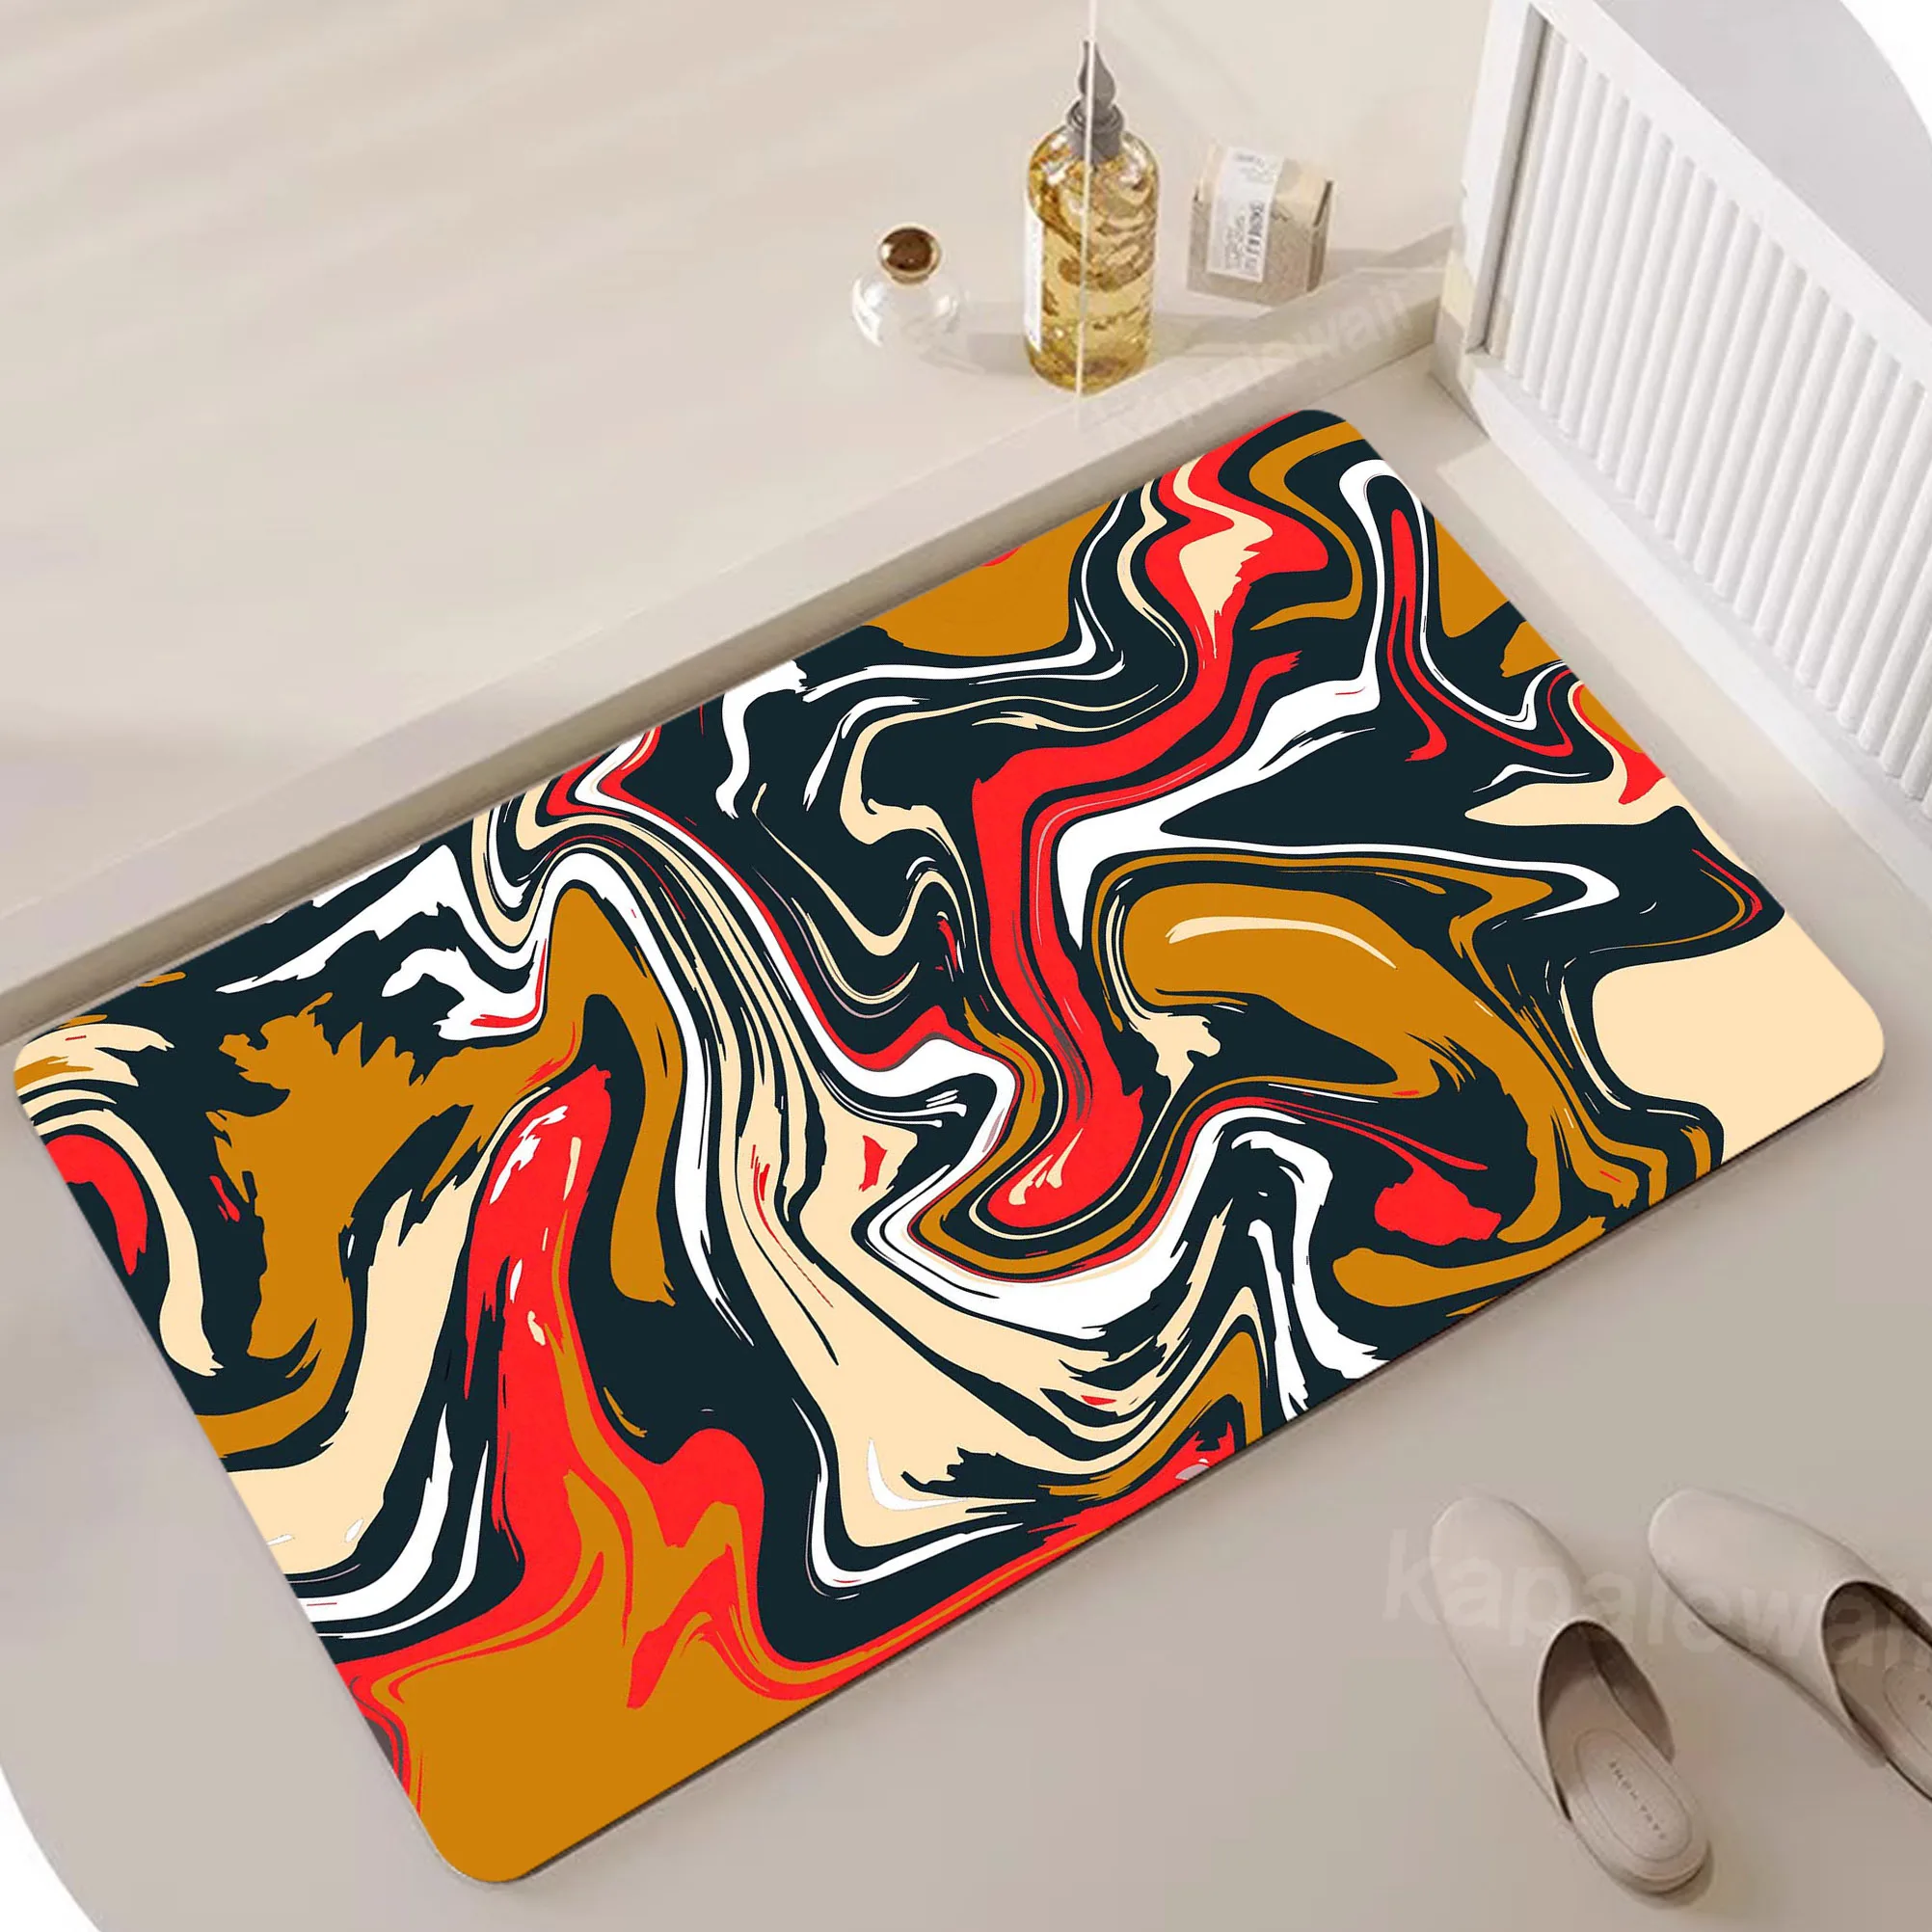 

Diatom Floor Strata Liquid Pattern Rug for Living Room Area Carpet Bathroom Mat Creative Doormat Bedroom Mat Home Decor Mat